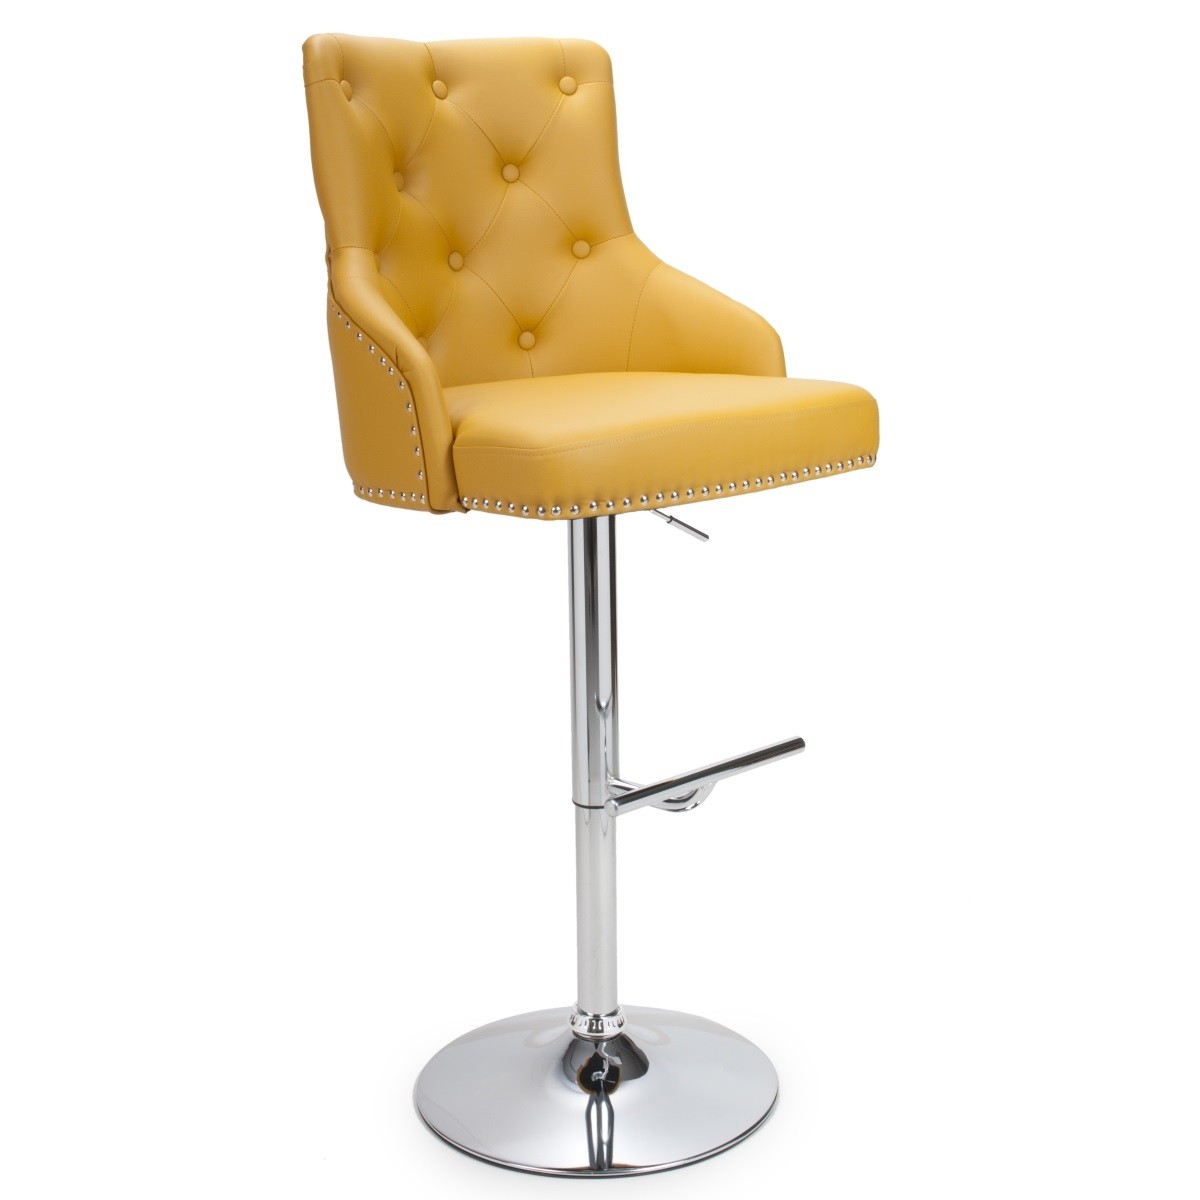 Barstools rocco luxury yellow leather effect bar stool